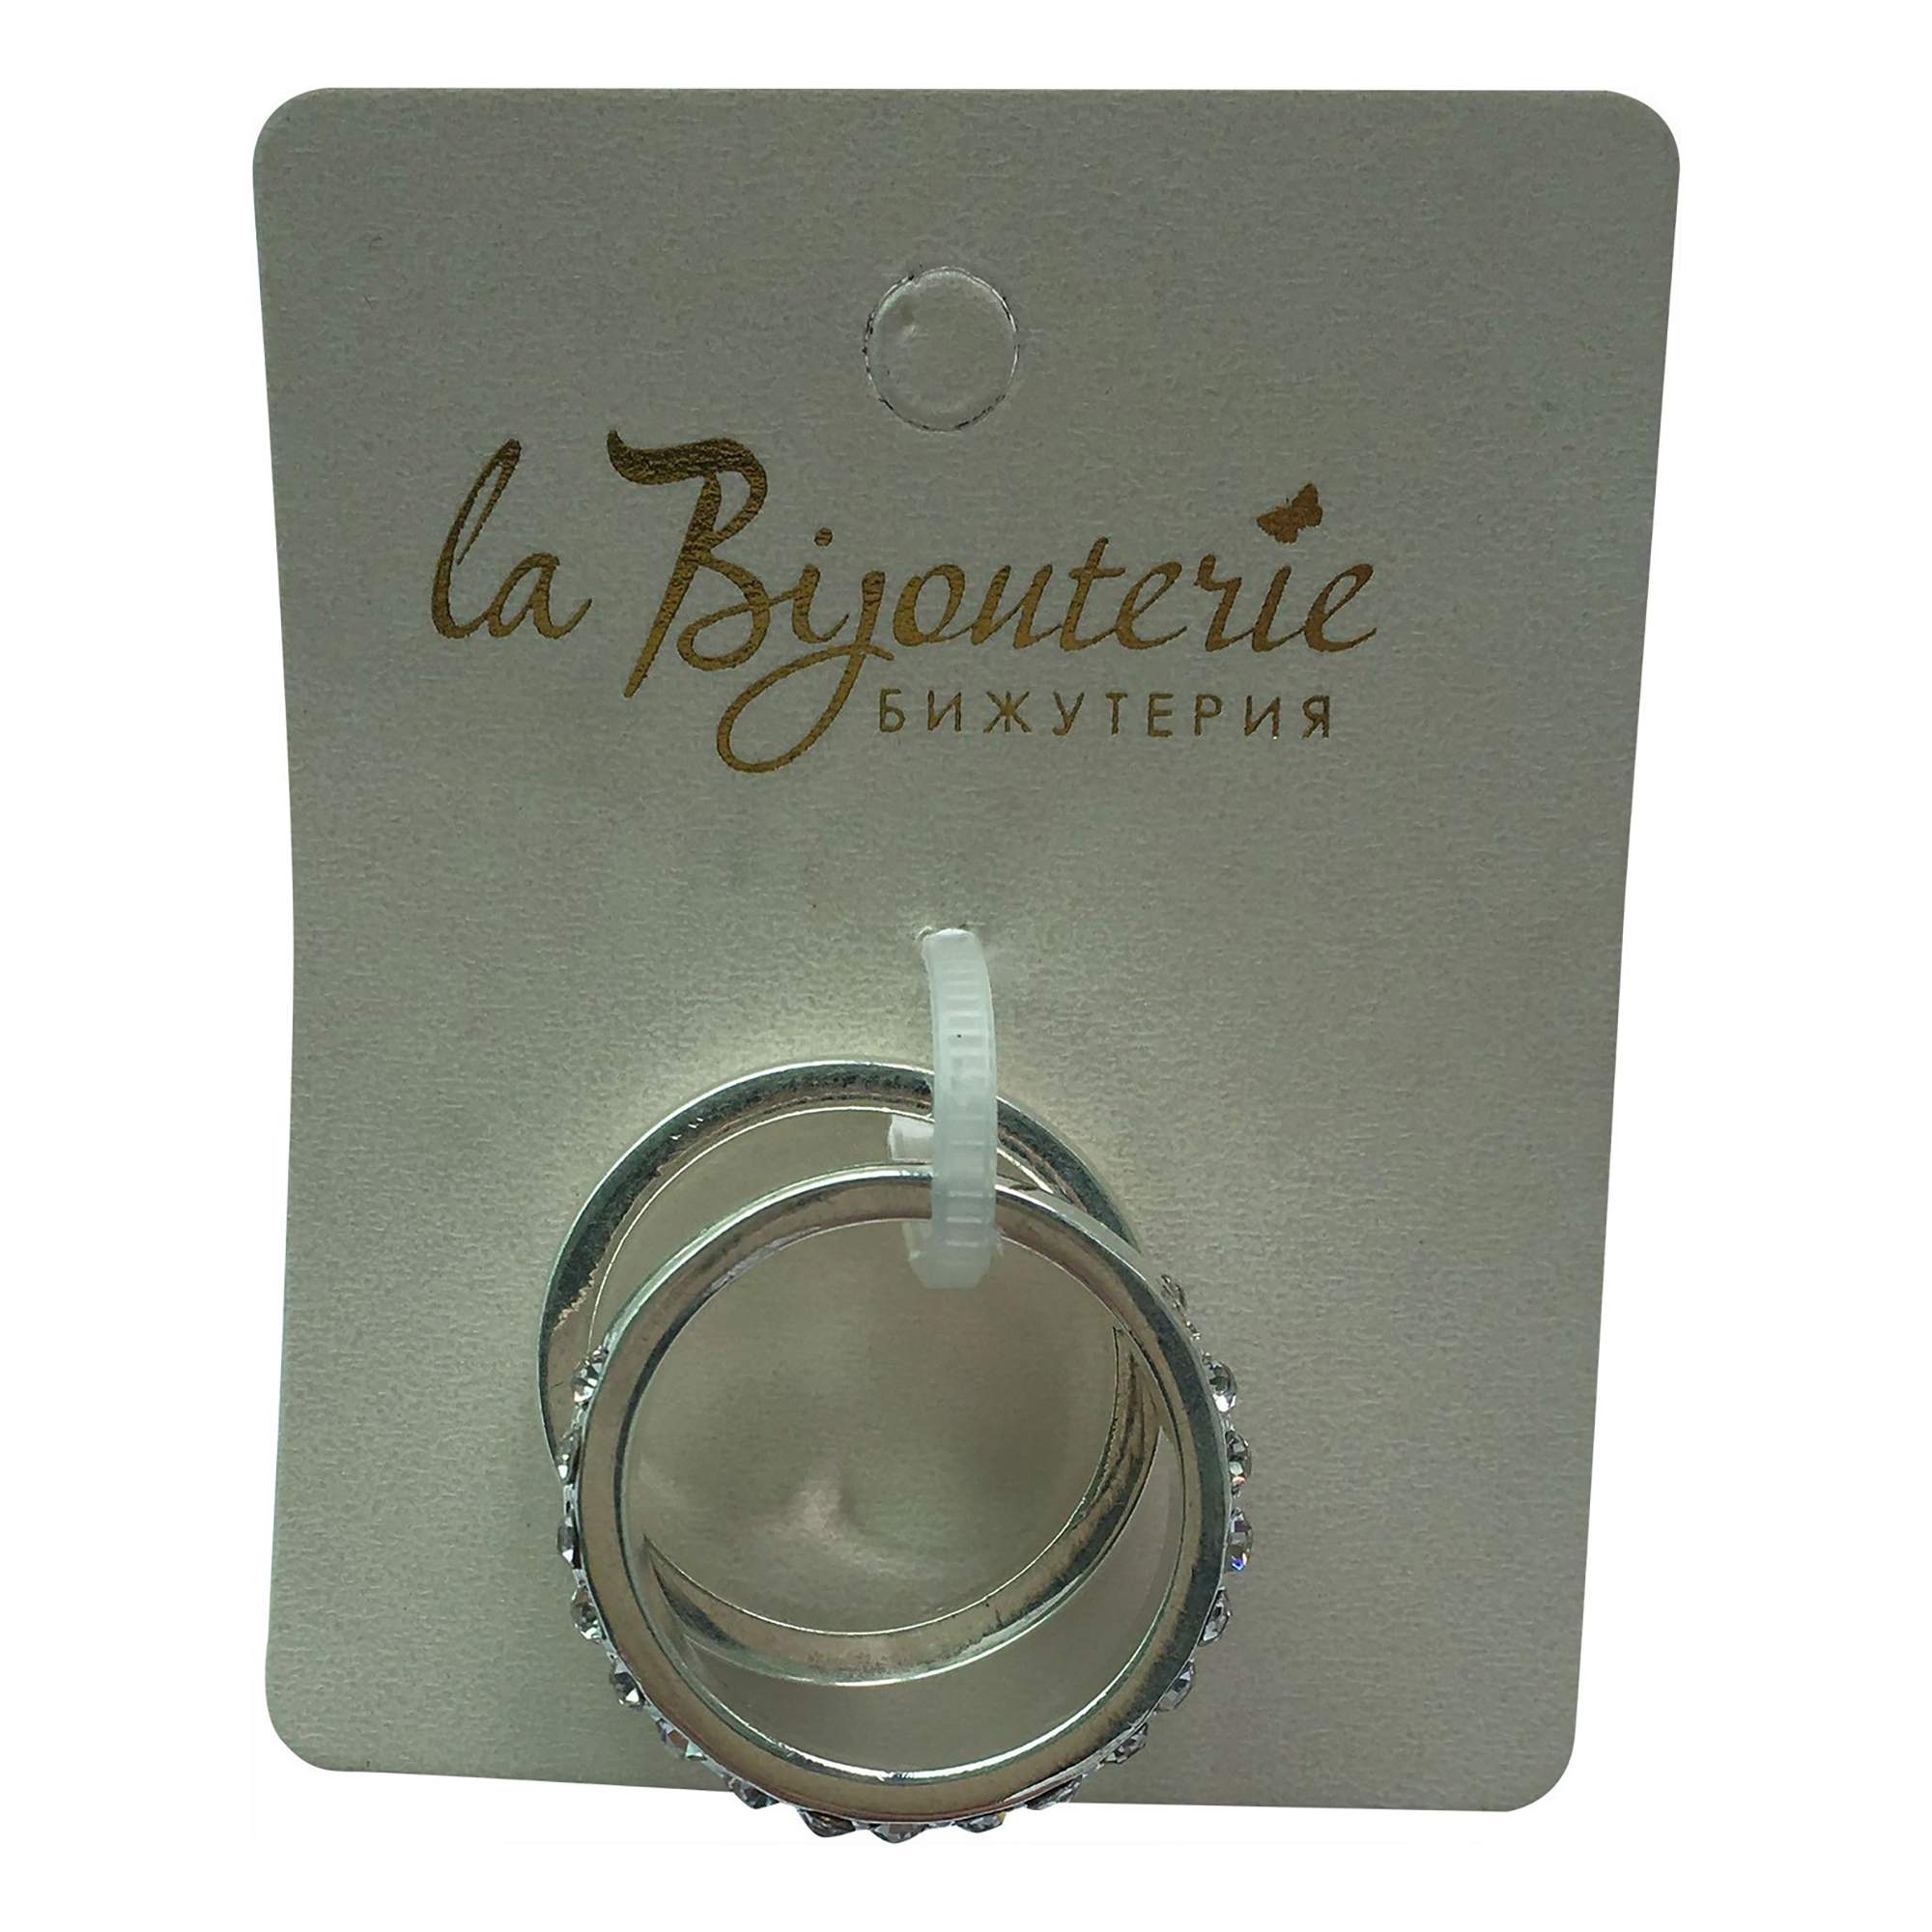 Кольцо из бижутерного сплава со стразами р. one size La Bijouterie